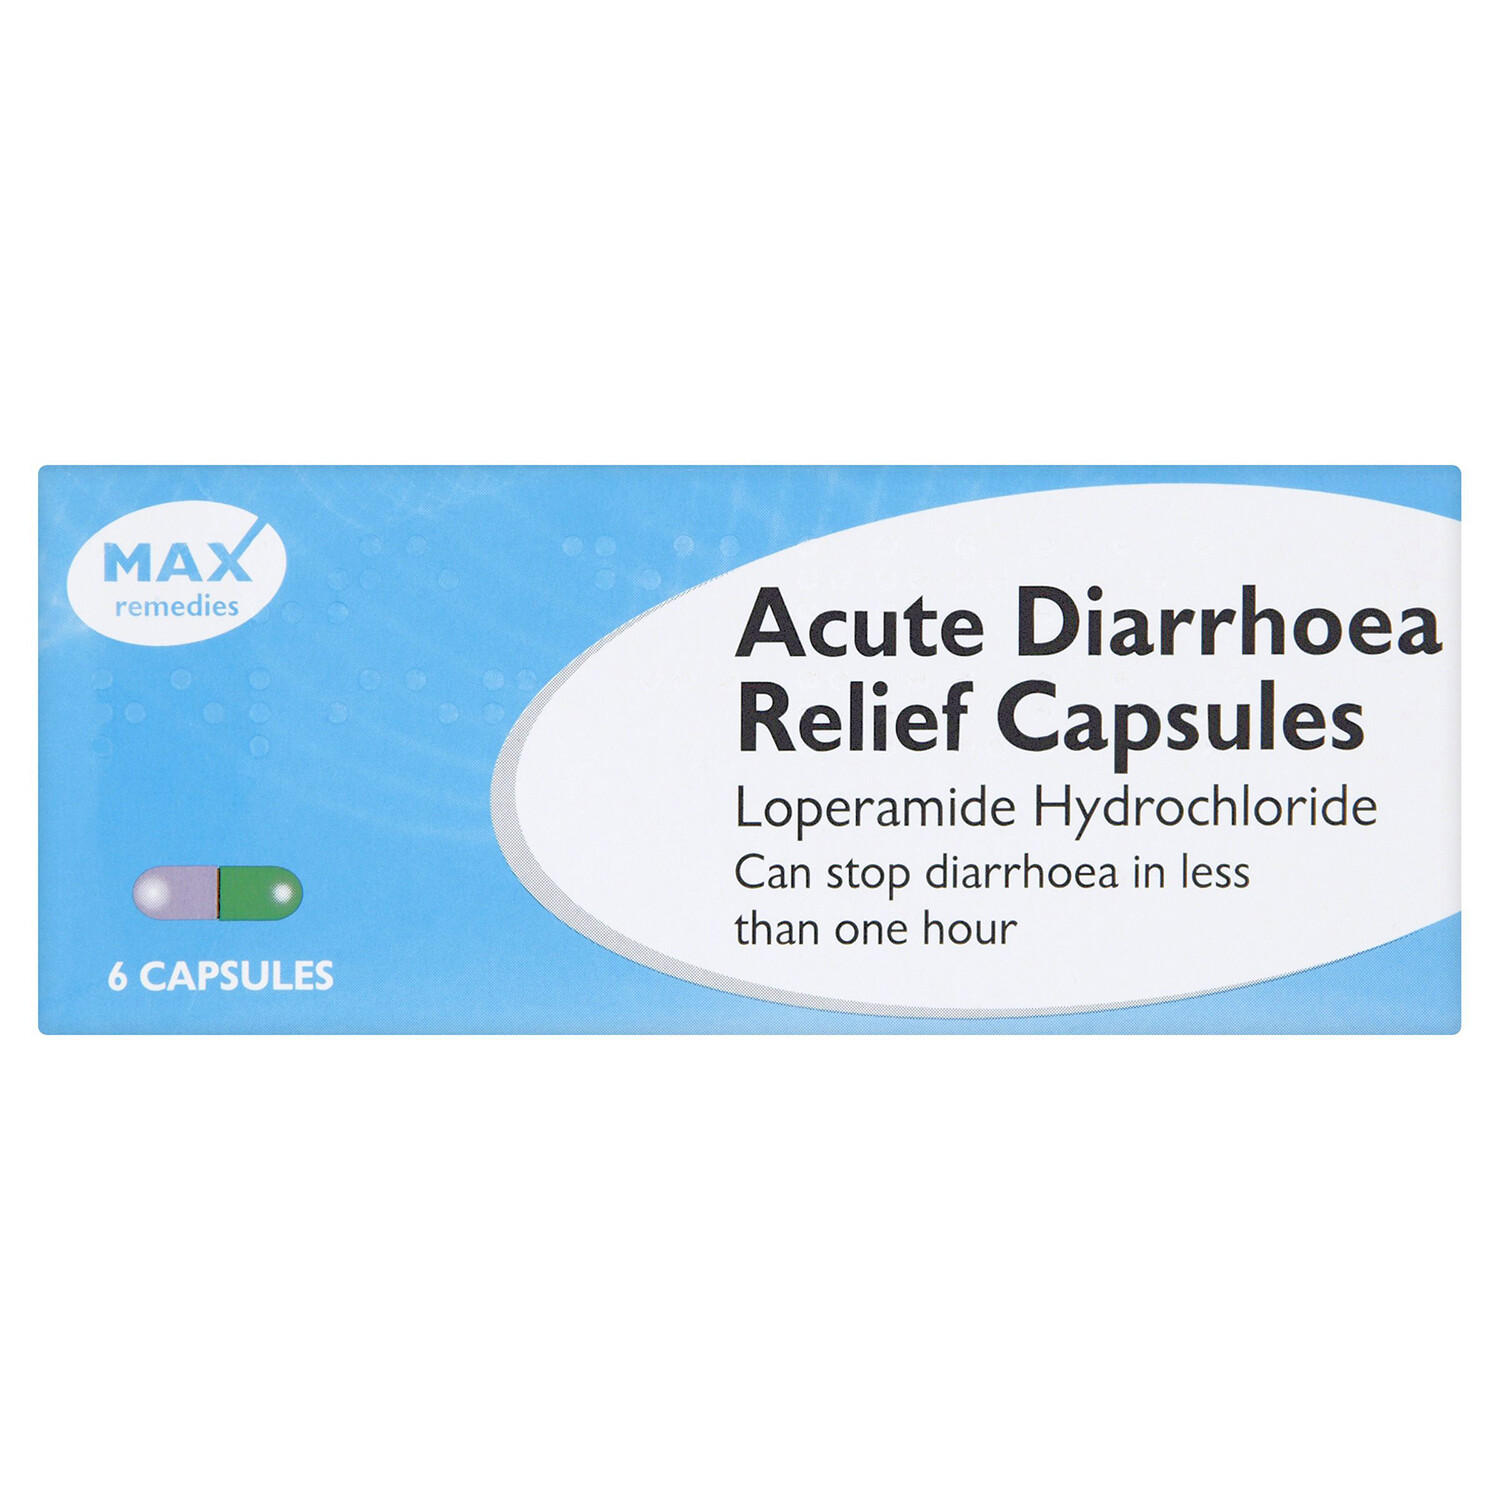 Max Remedies Acute Diarrhoea Relief Capsules 50g 6 Pack Image